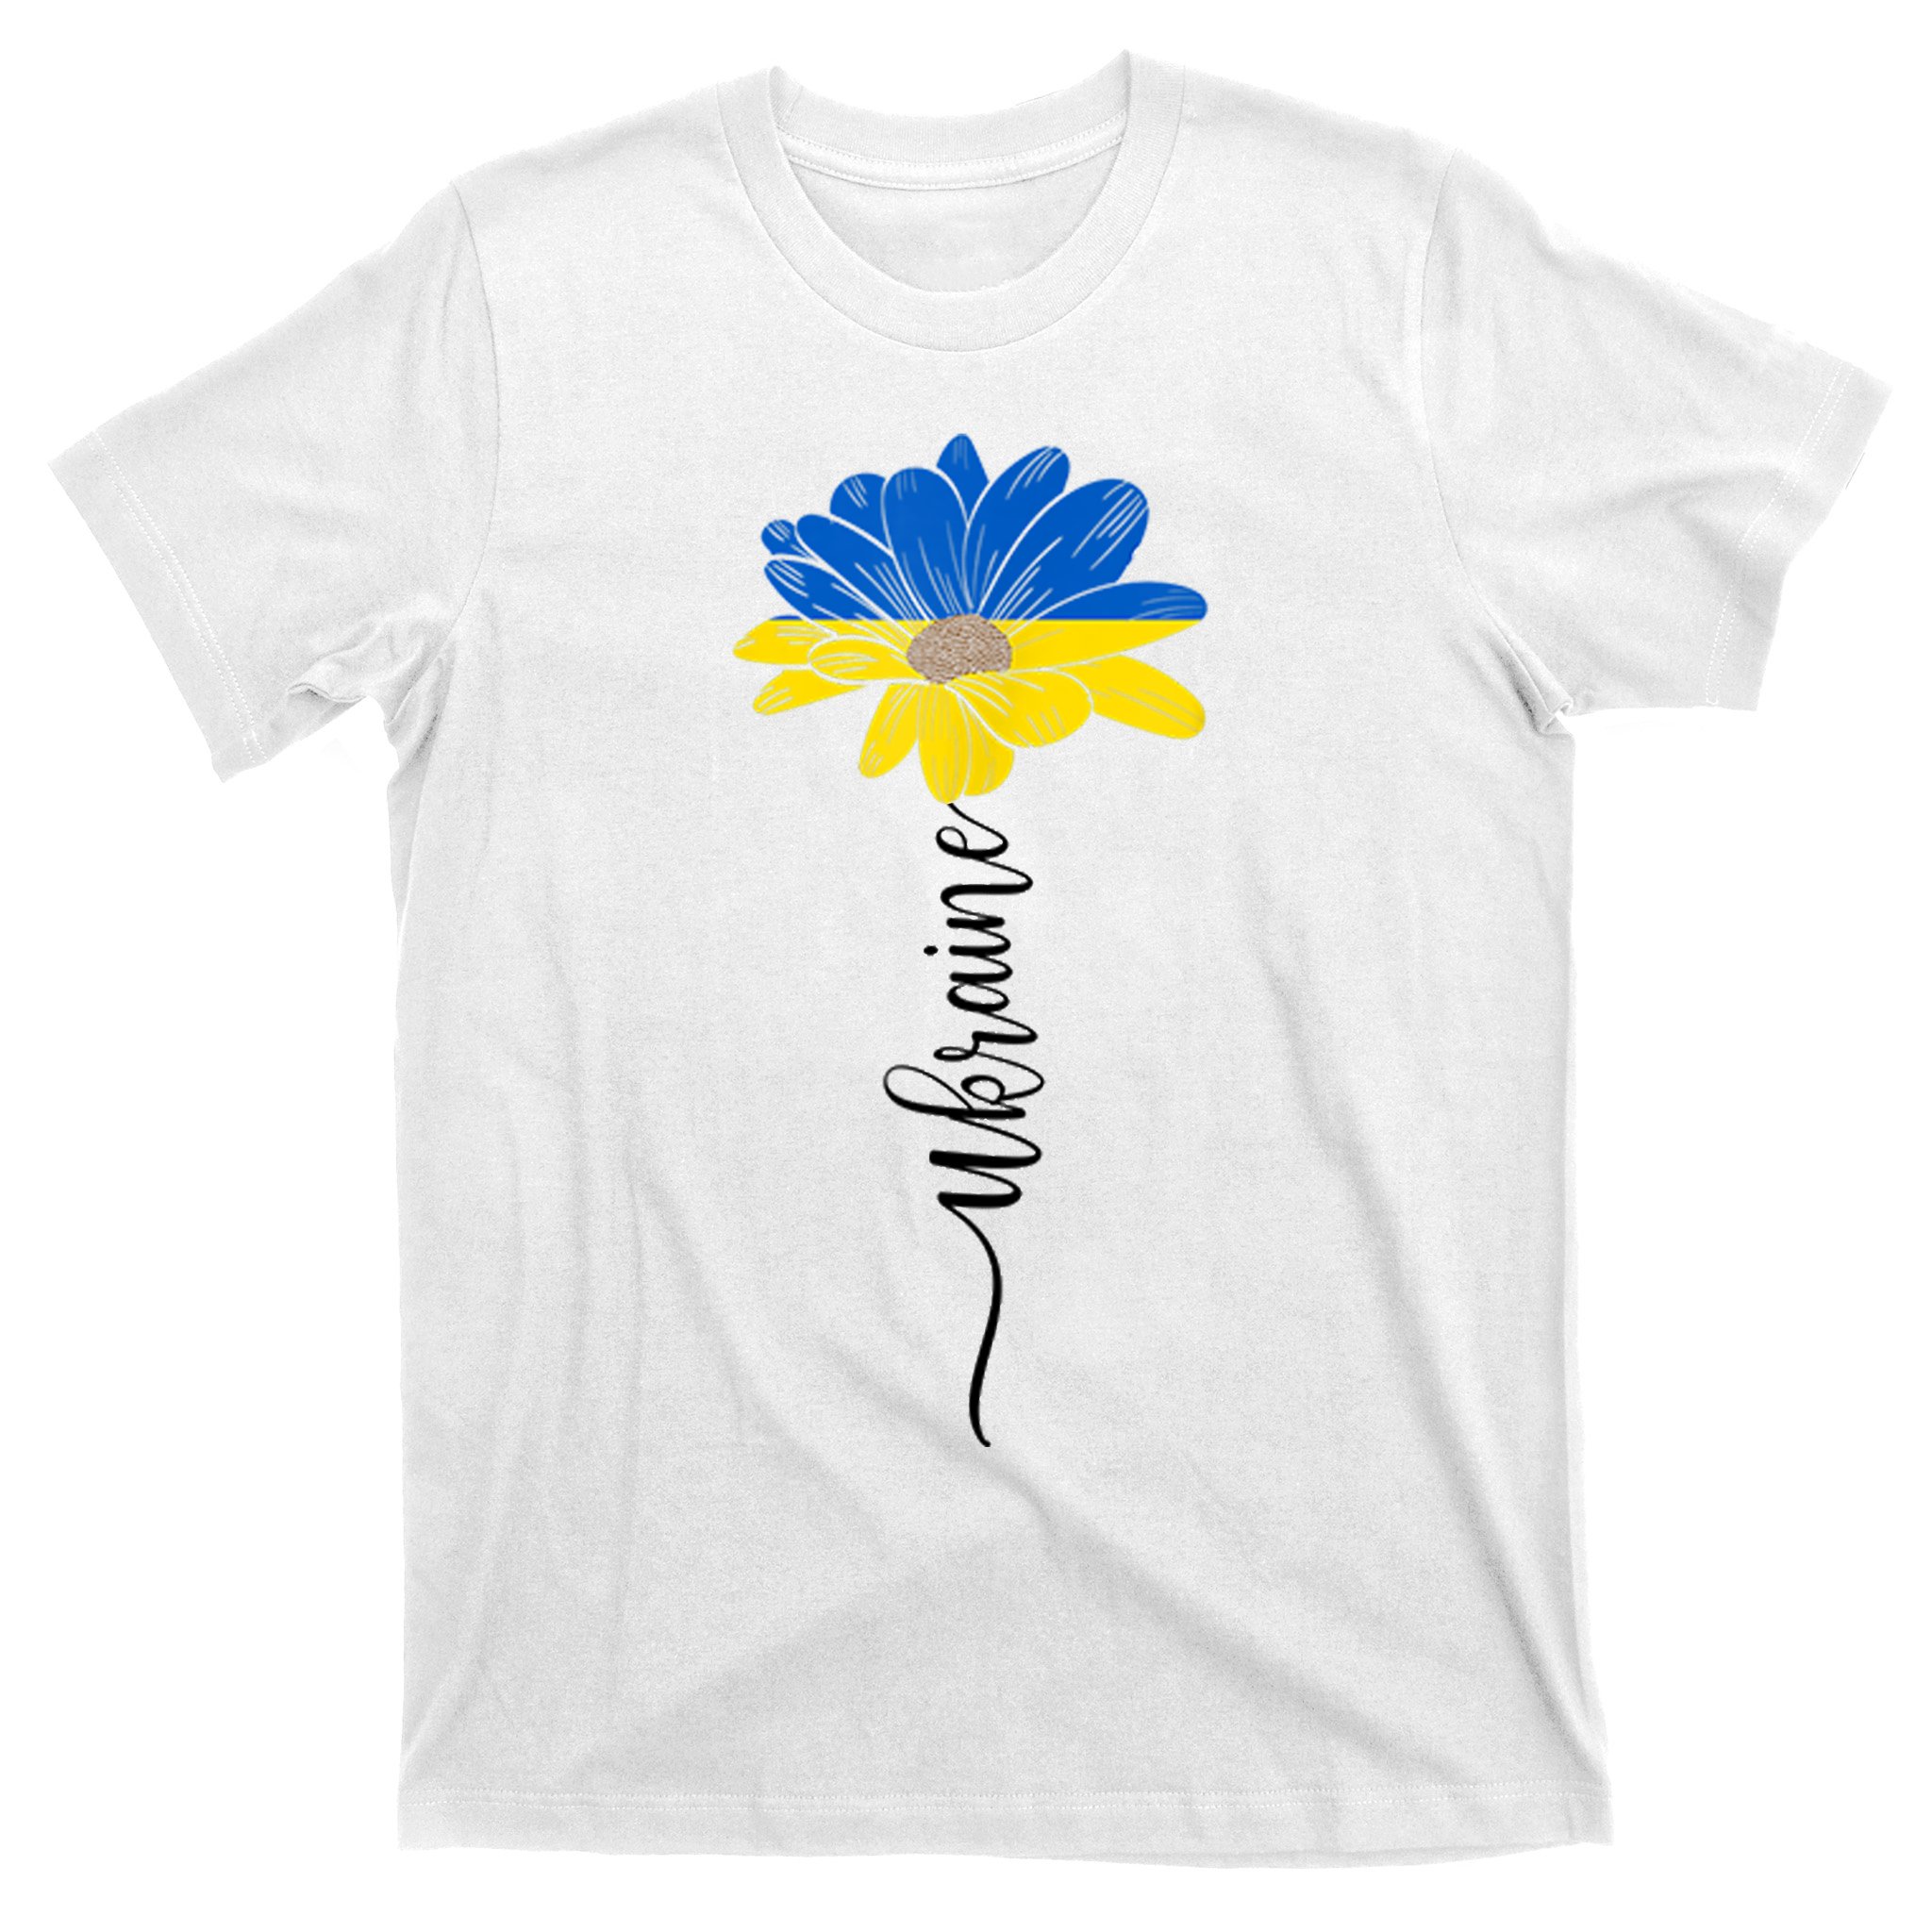 Squatch King Threads Distressed Sunflower Script Ukraine Peace in Ukraine Womens Racerback Tank Top T-Shirt 